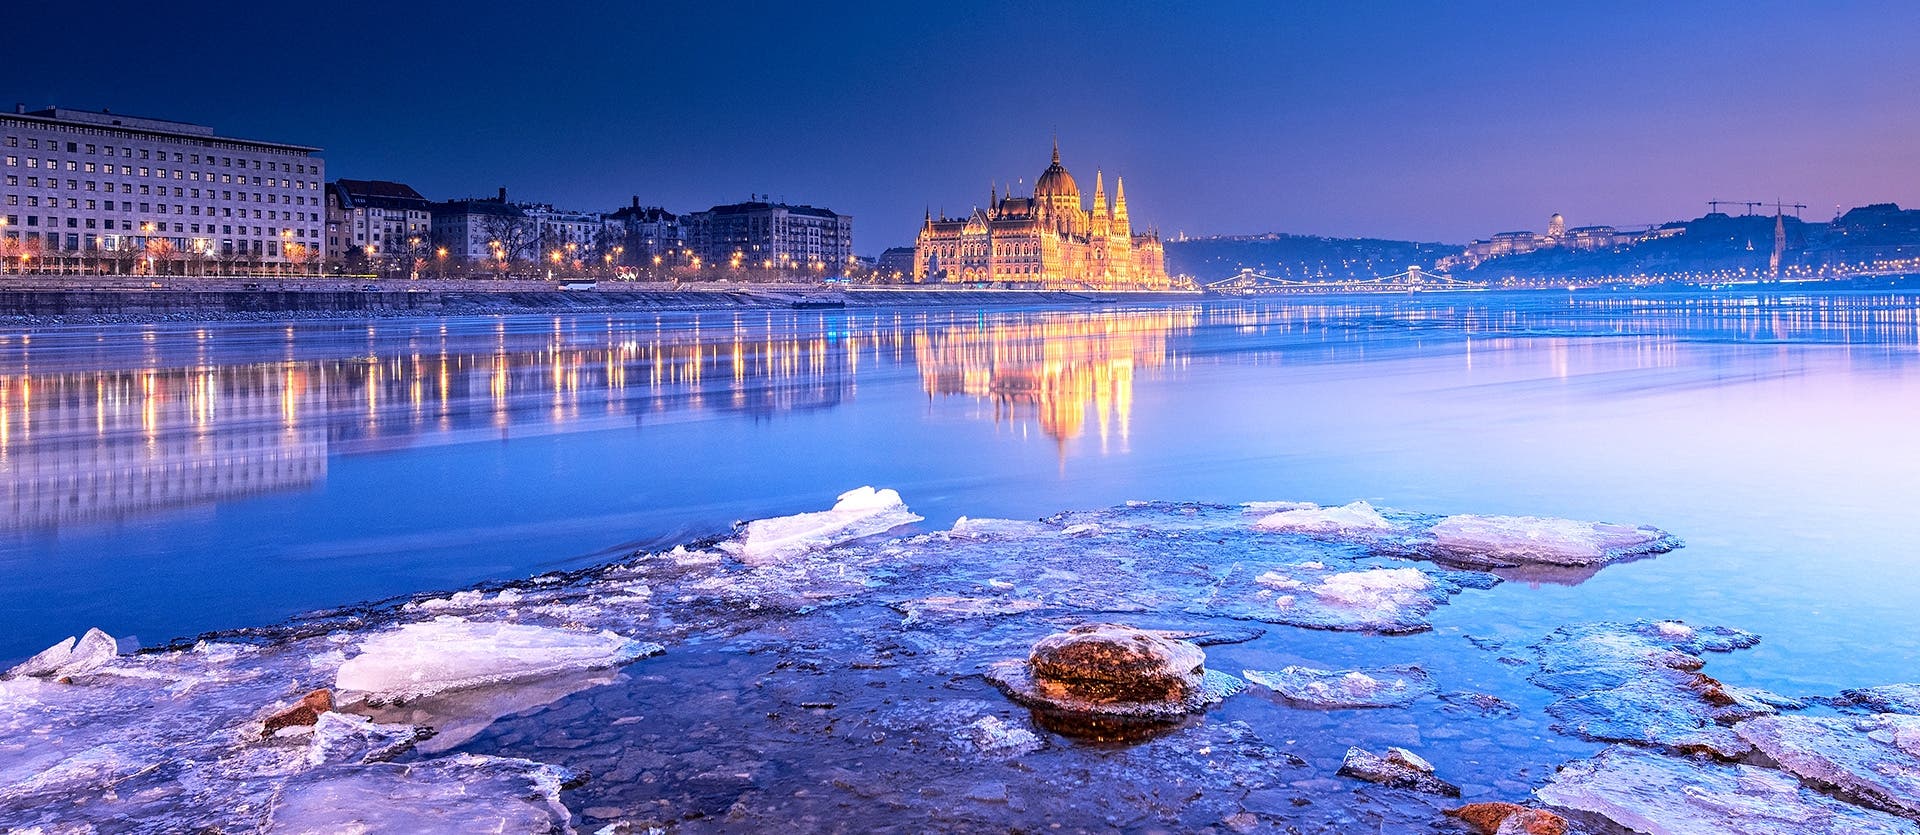 Festive Season Cruise on the Danube River